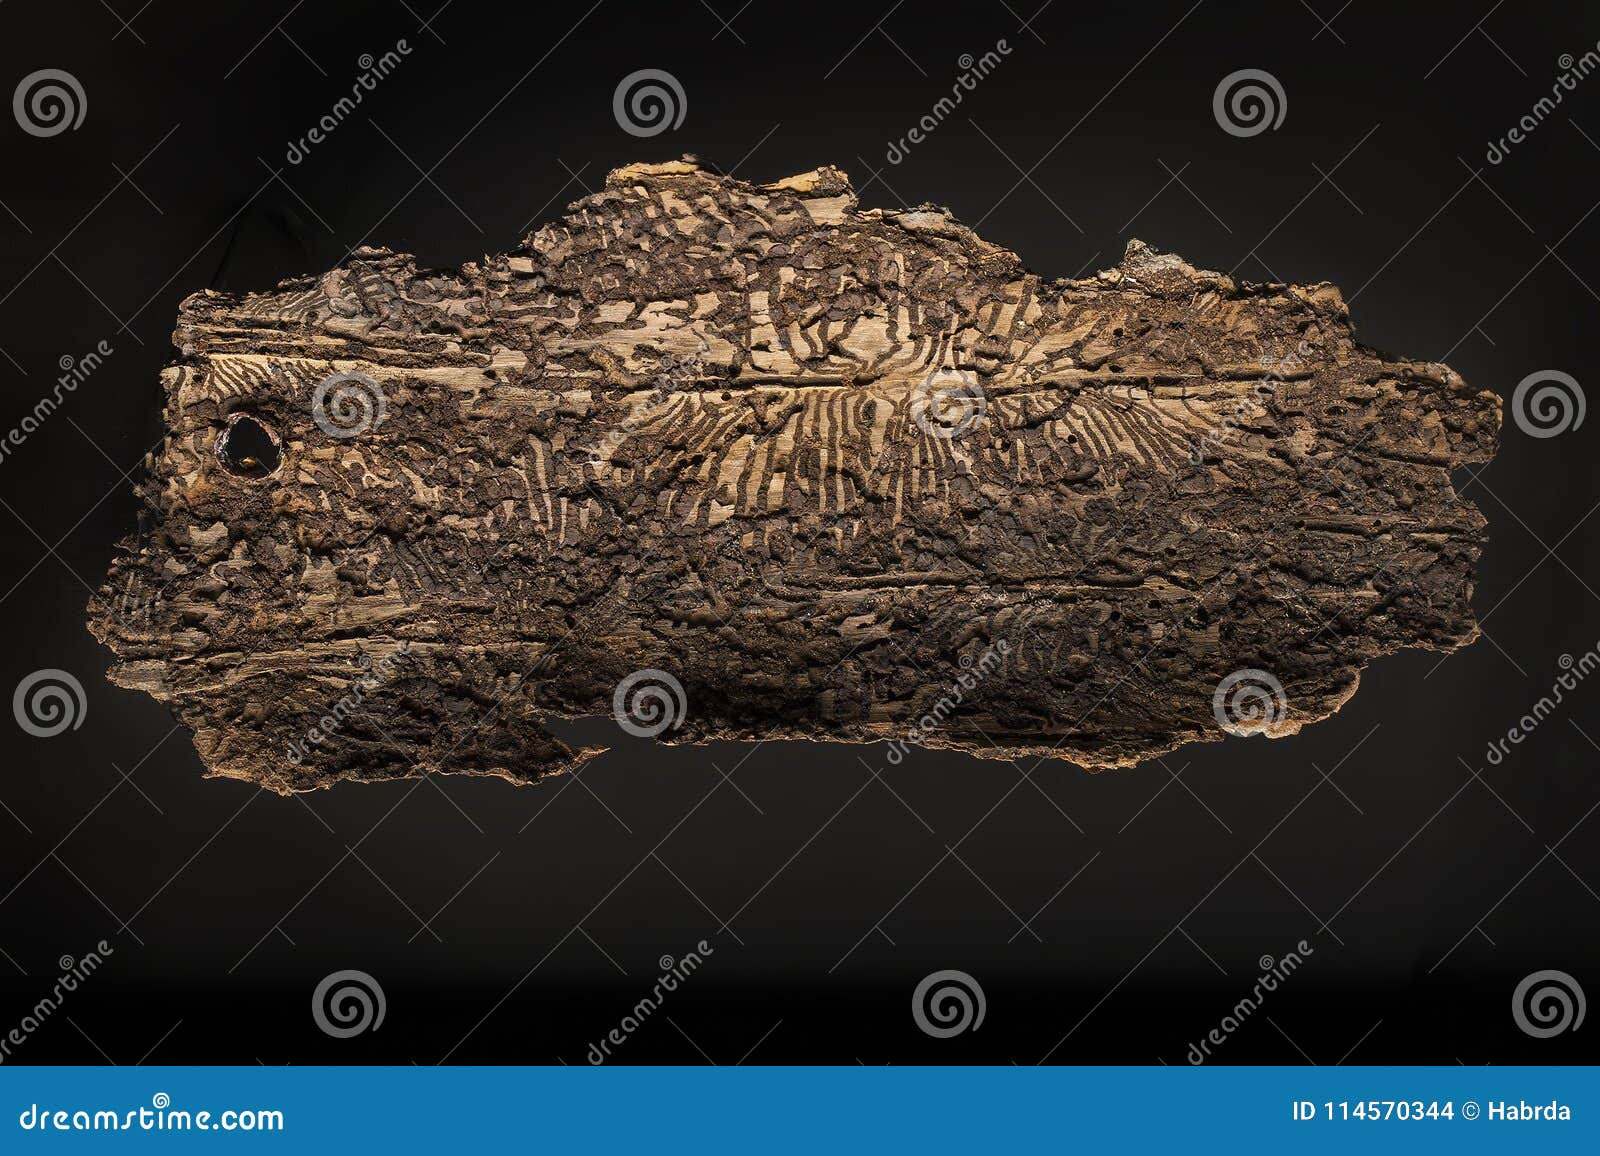 bark of spruce after bark beatles